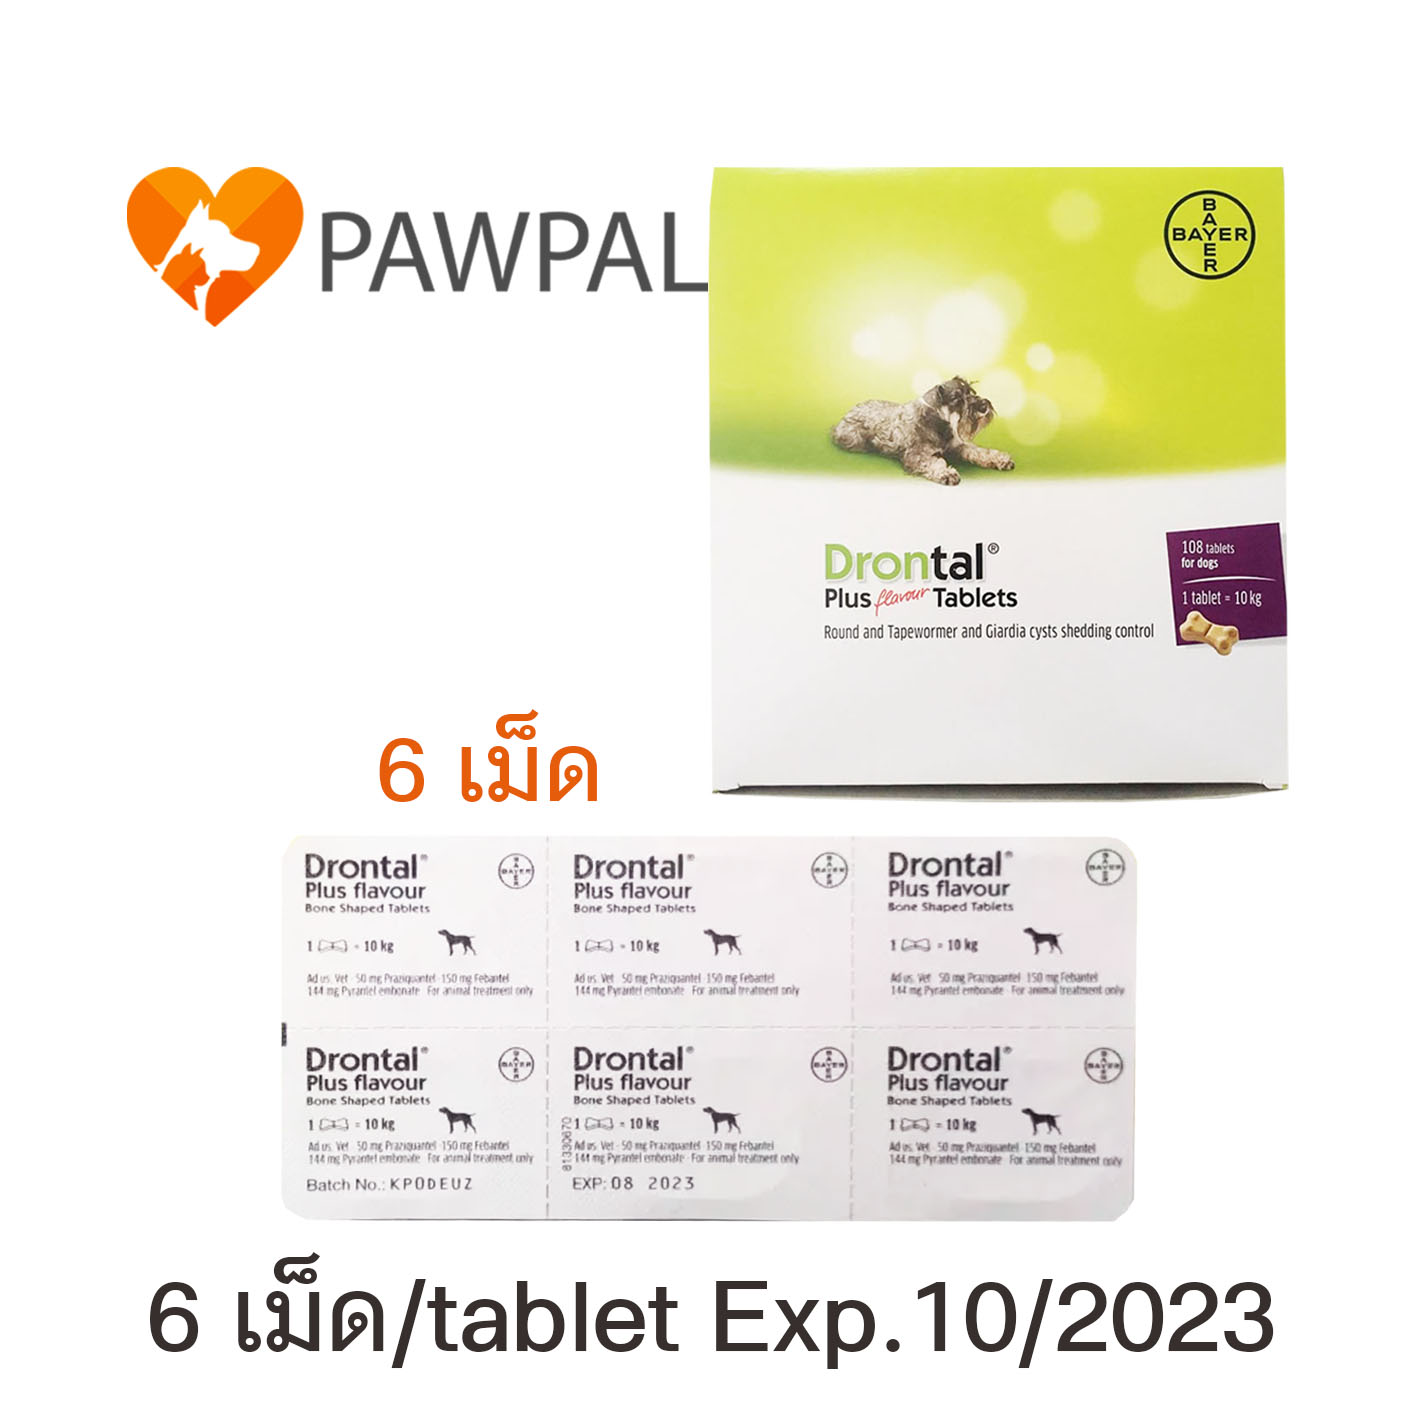 Drontal Plus Bayer ดรอนทัล พลัส Exp.10/2023 สำหรับ สุนัข รสเนื้อ รูปกระดูก tablet for dog (6 เม็ด/tablets)